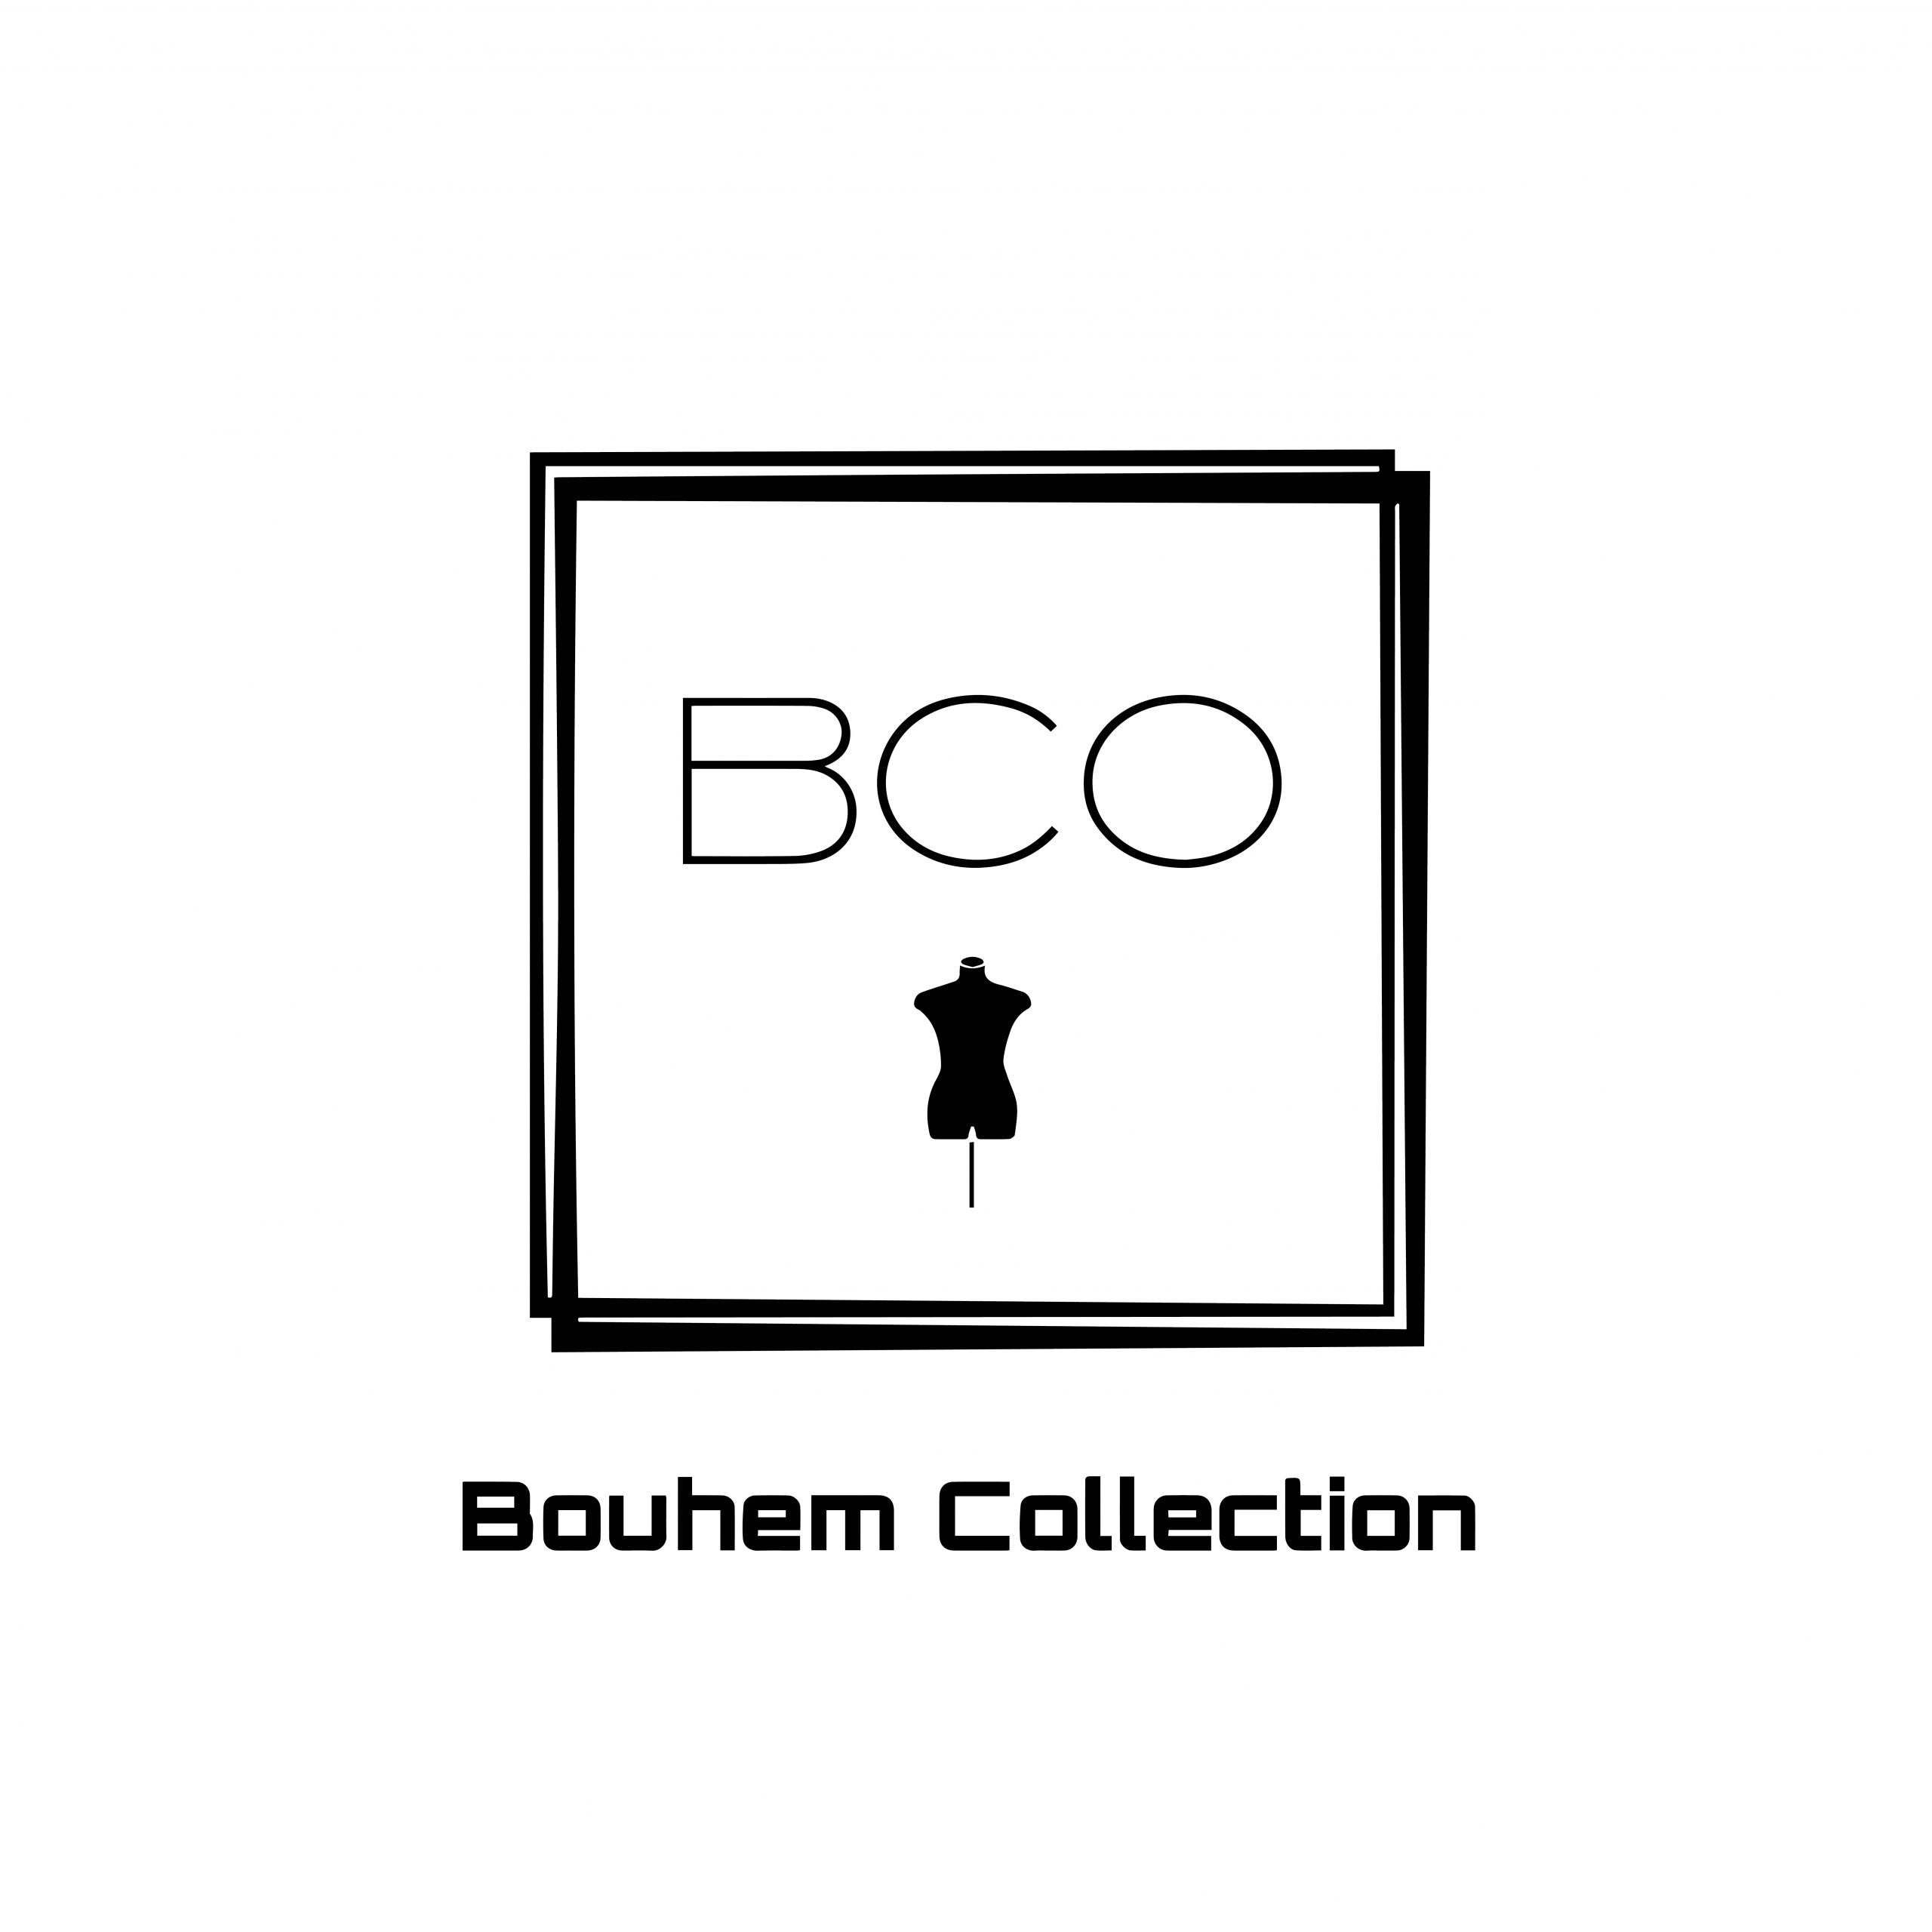 Bouhem Collection